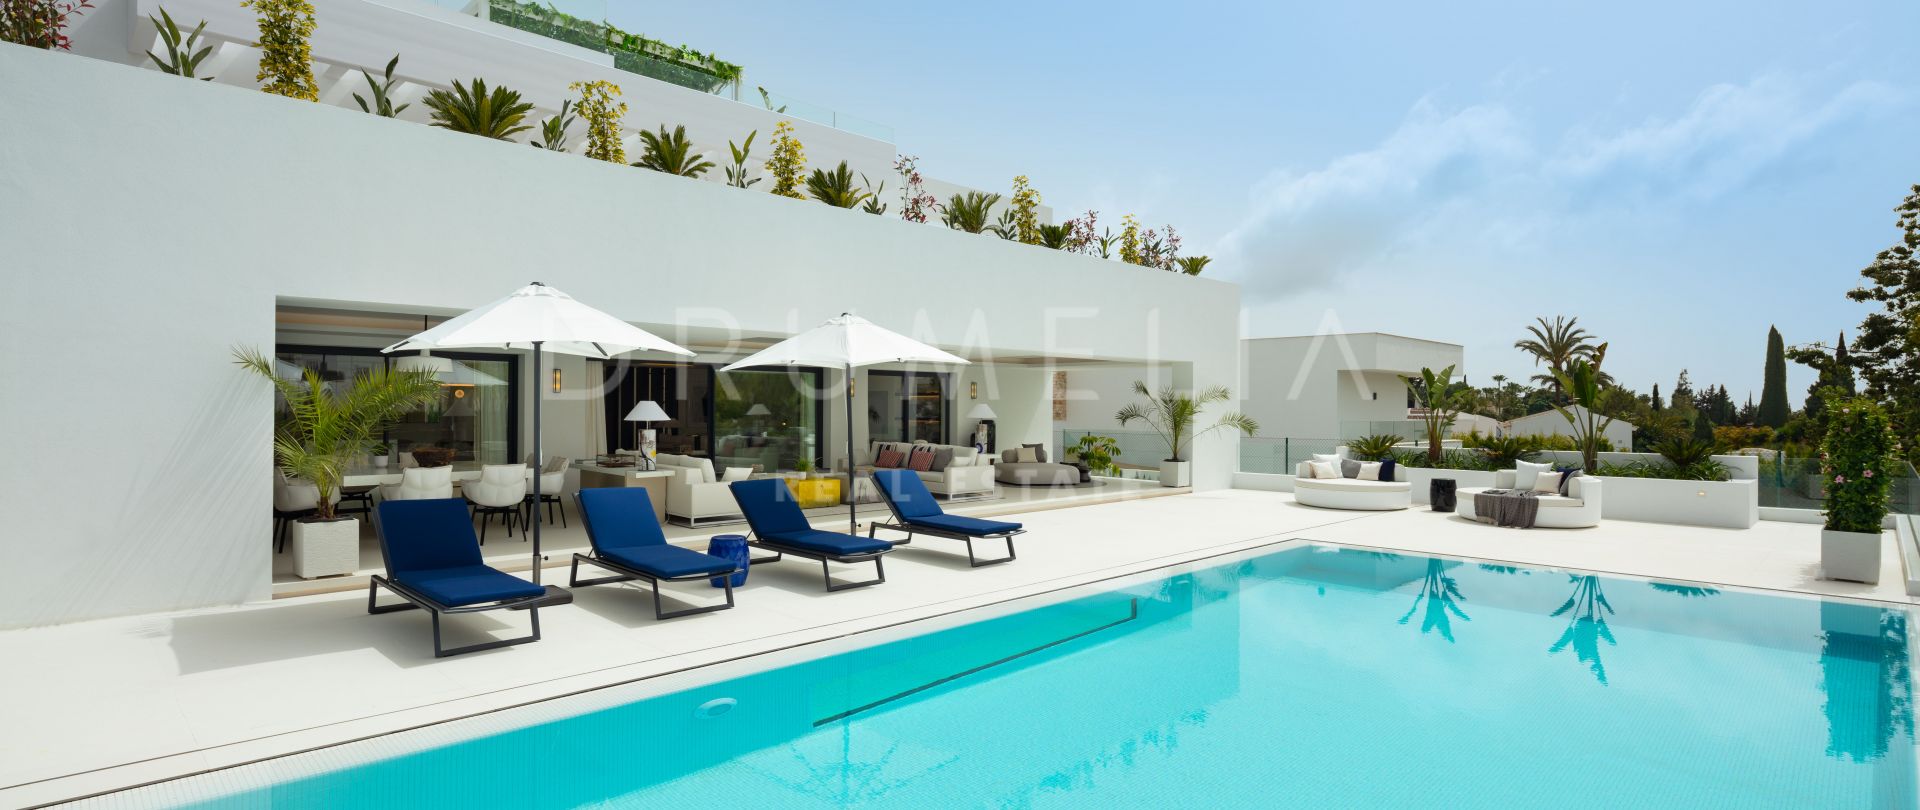 Aloha 151 - New Modern Luxury Chic Villa with Designer Interiors in Nueva Andalucía